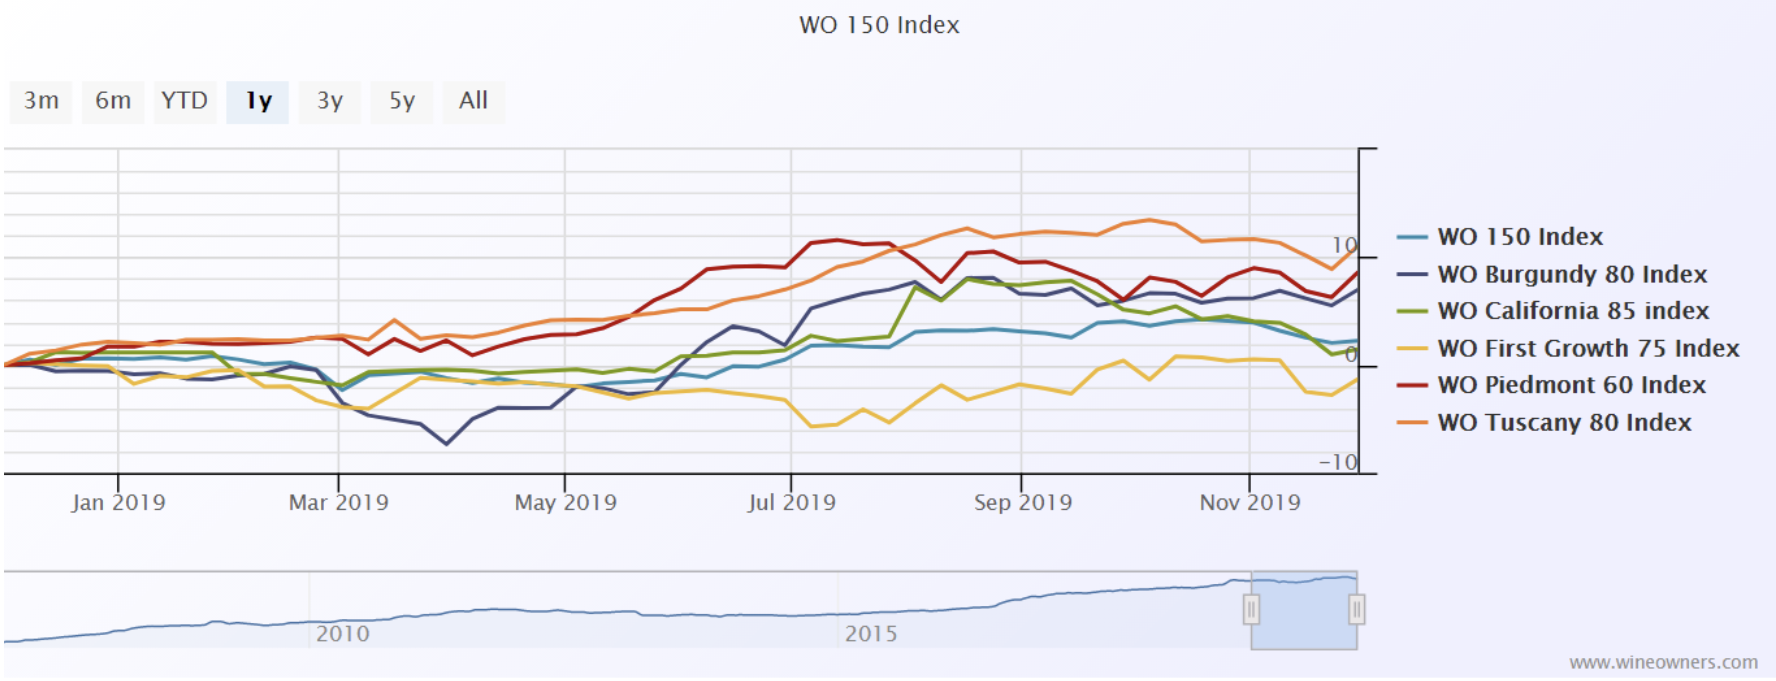 WO 150 Index - Wine Owners - November 2019